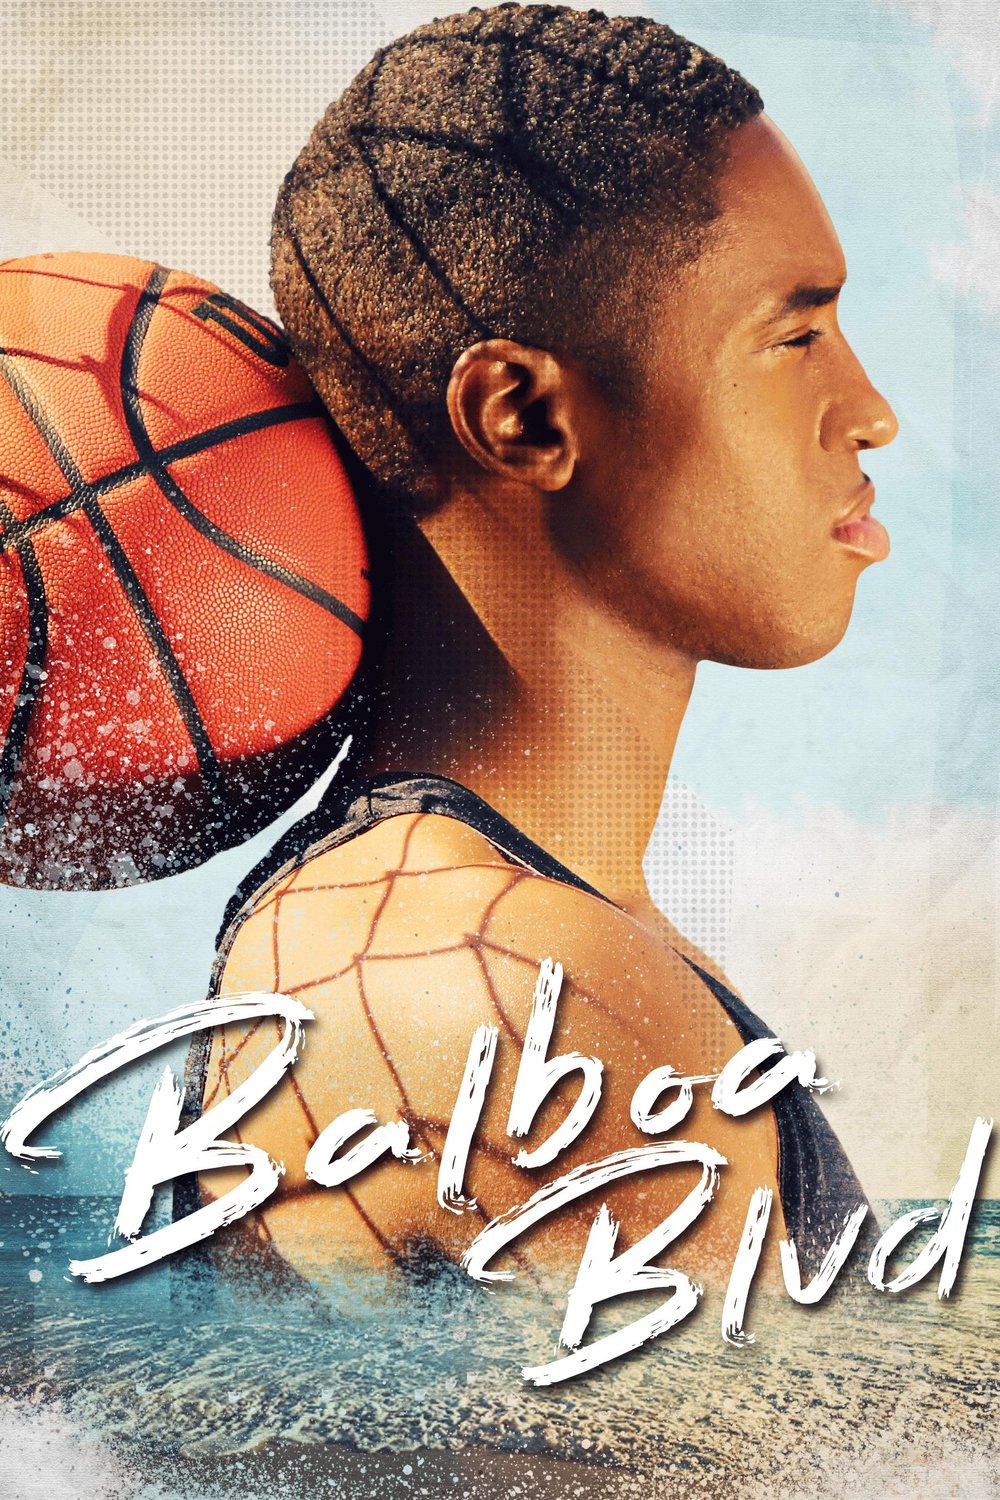 Poster of the movie Balboa Blvd